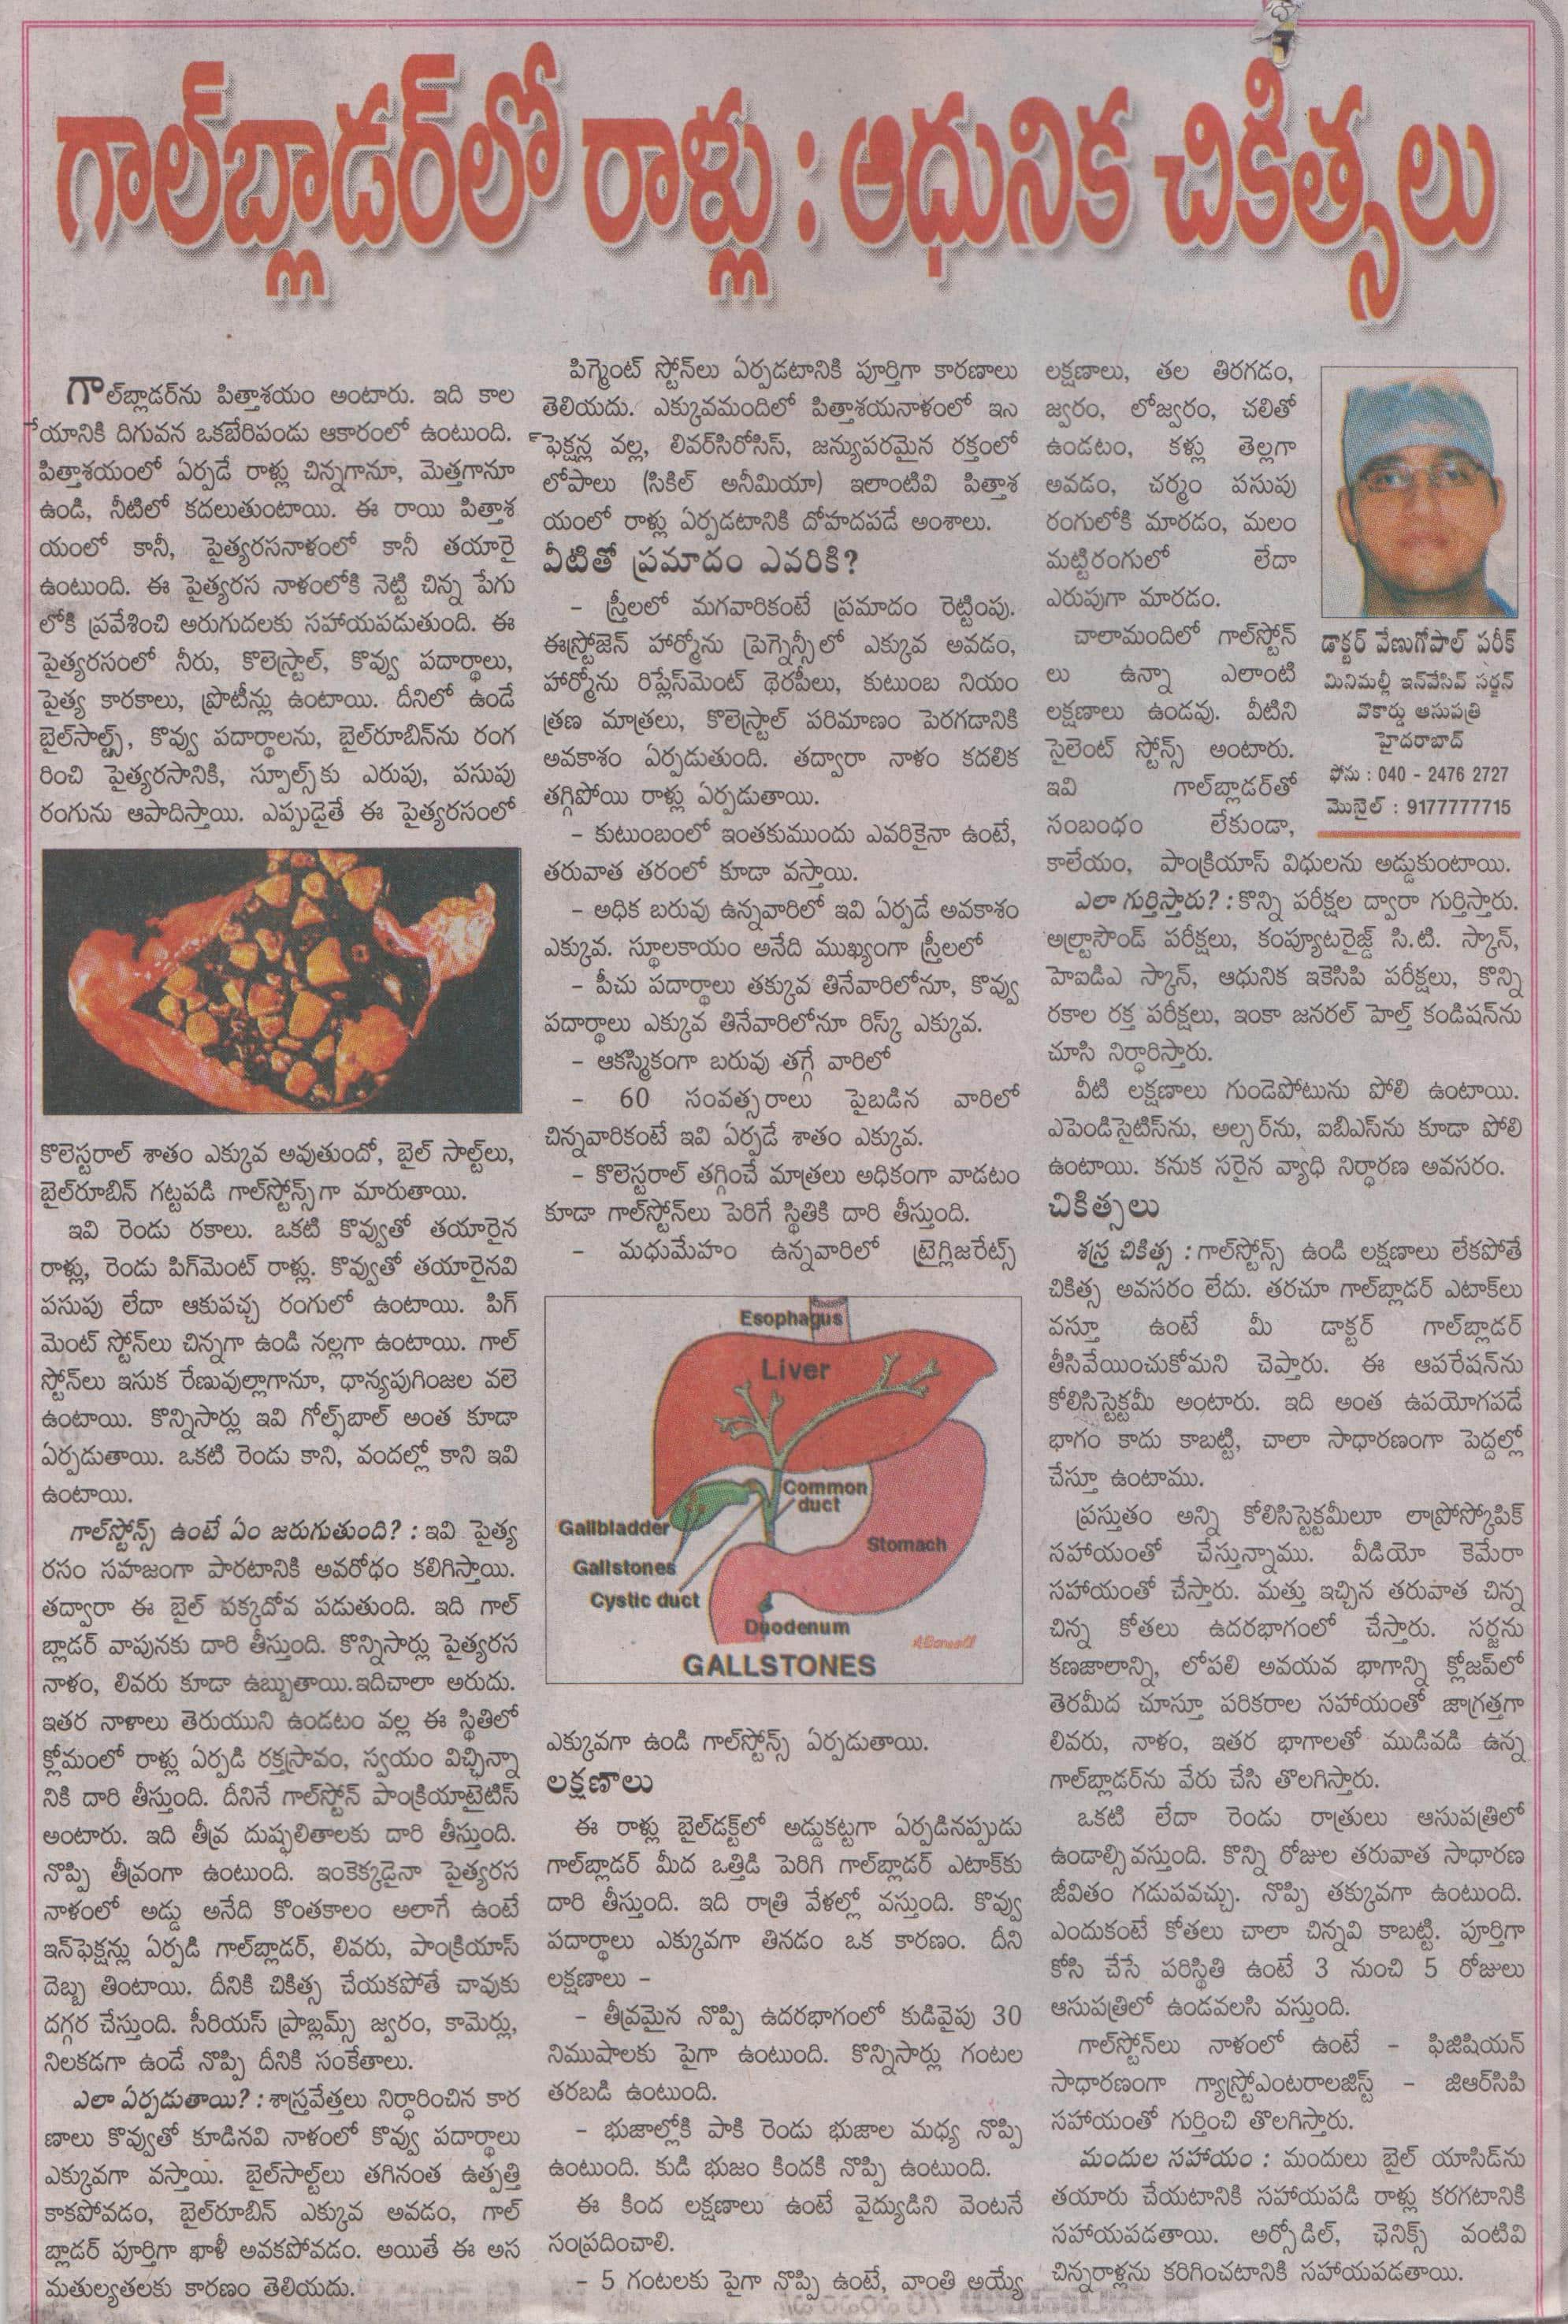 Treatment Gallbladder stones: Explained by Dr V Pareek Laparoscopic GI surgeon Hyderabad